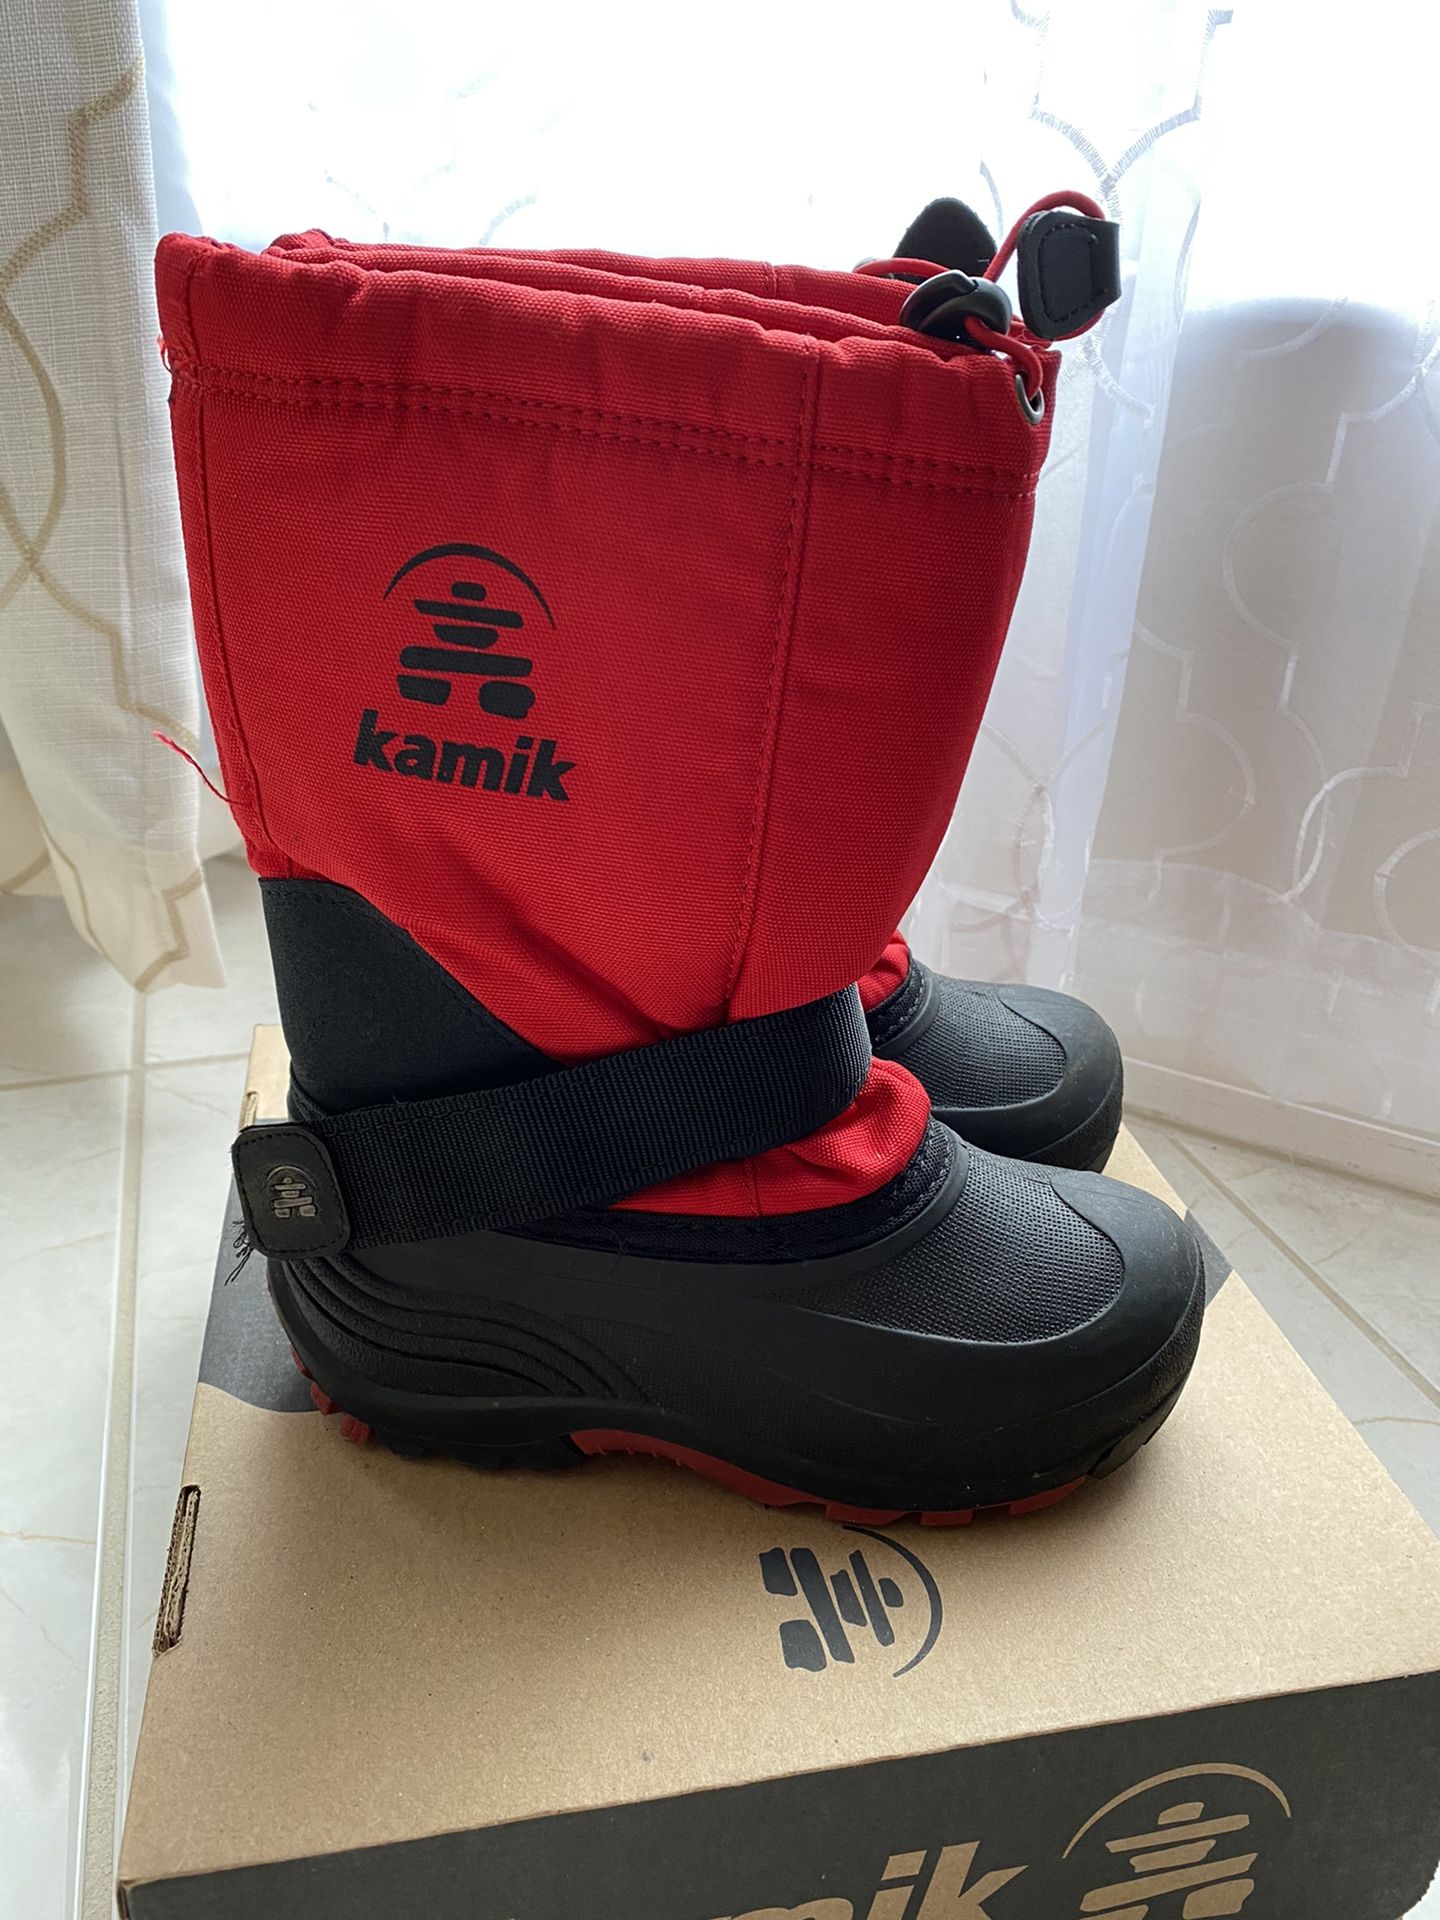 Kamik Kids Snow Boots Size 1 - Like New